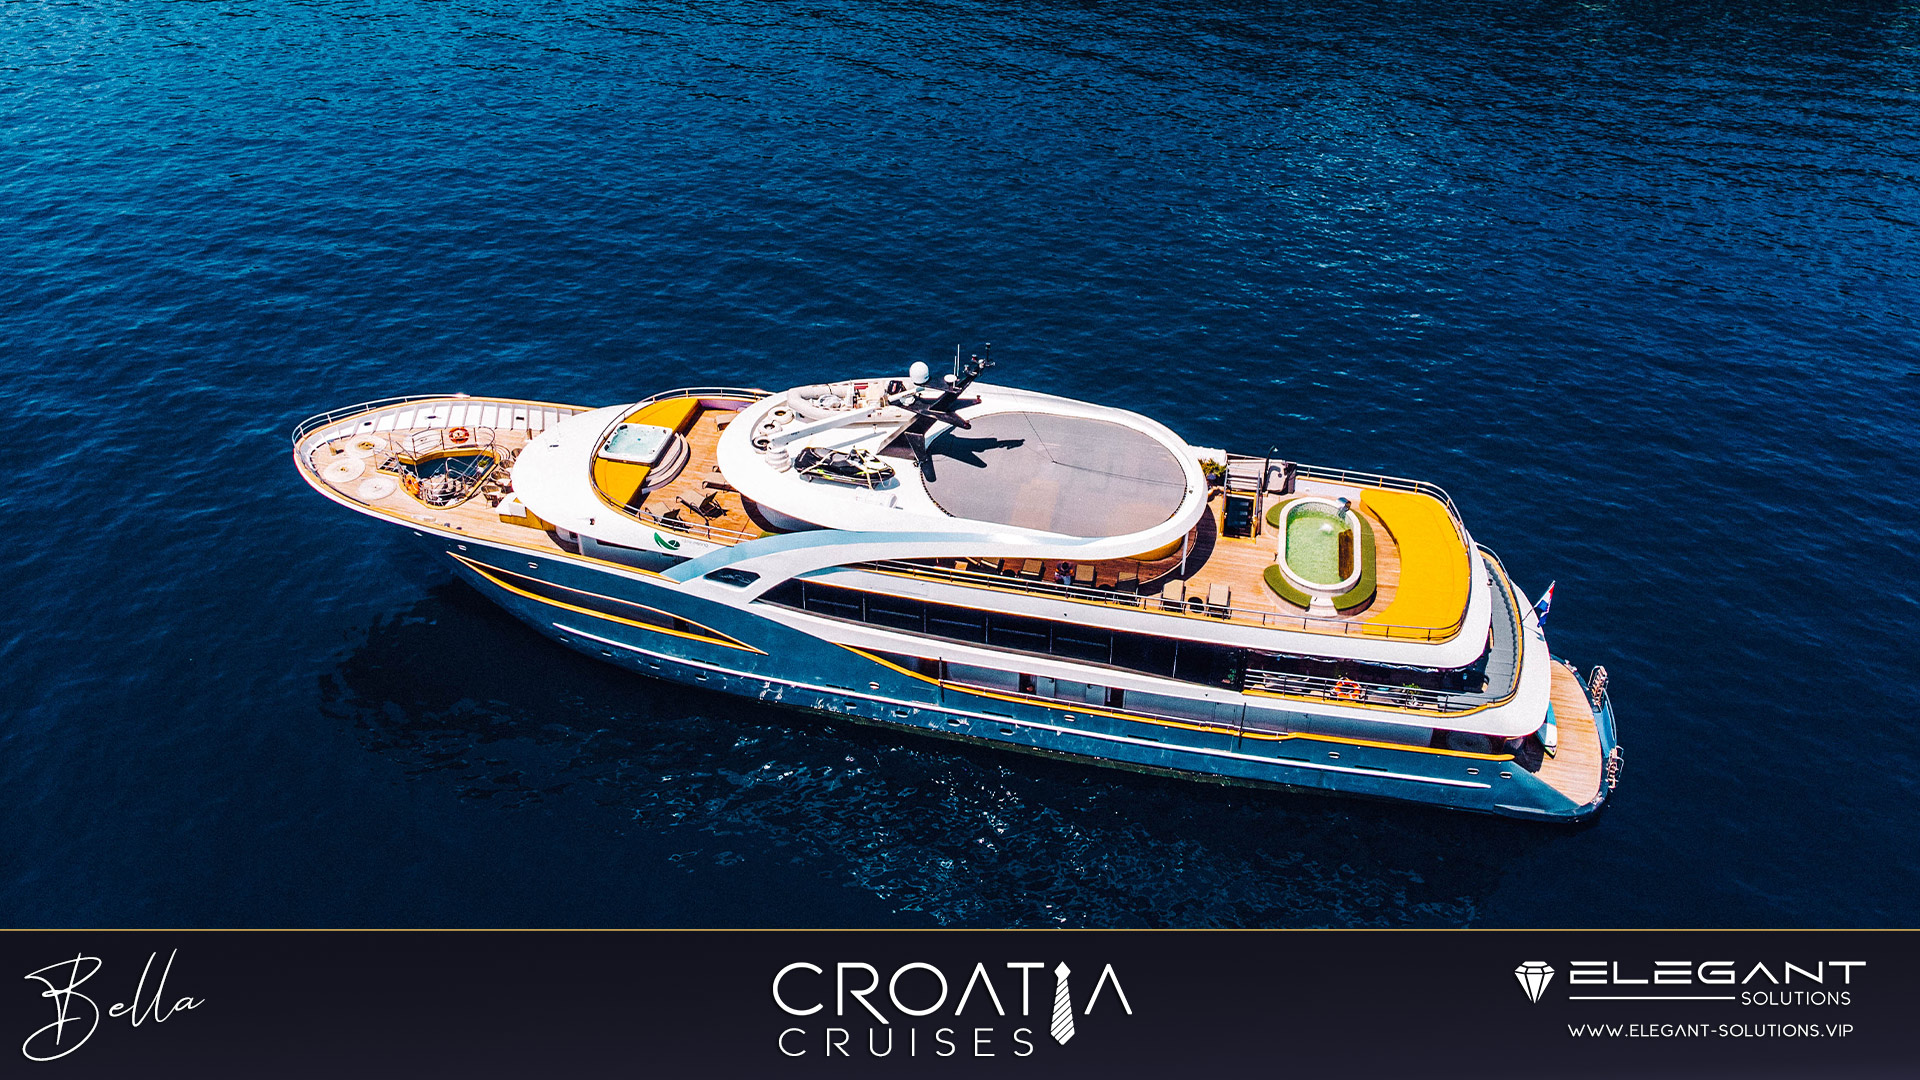 Bella Cruises Croatia 